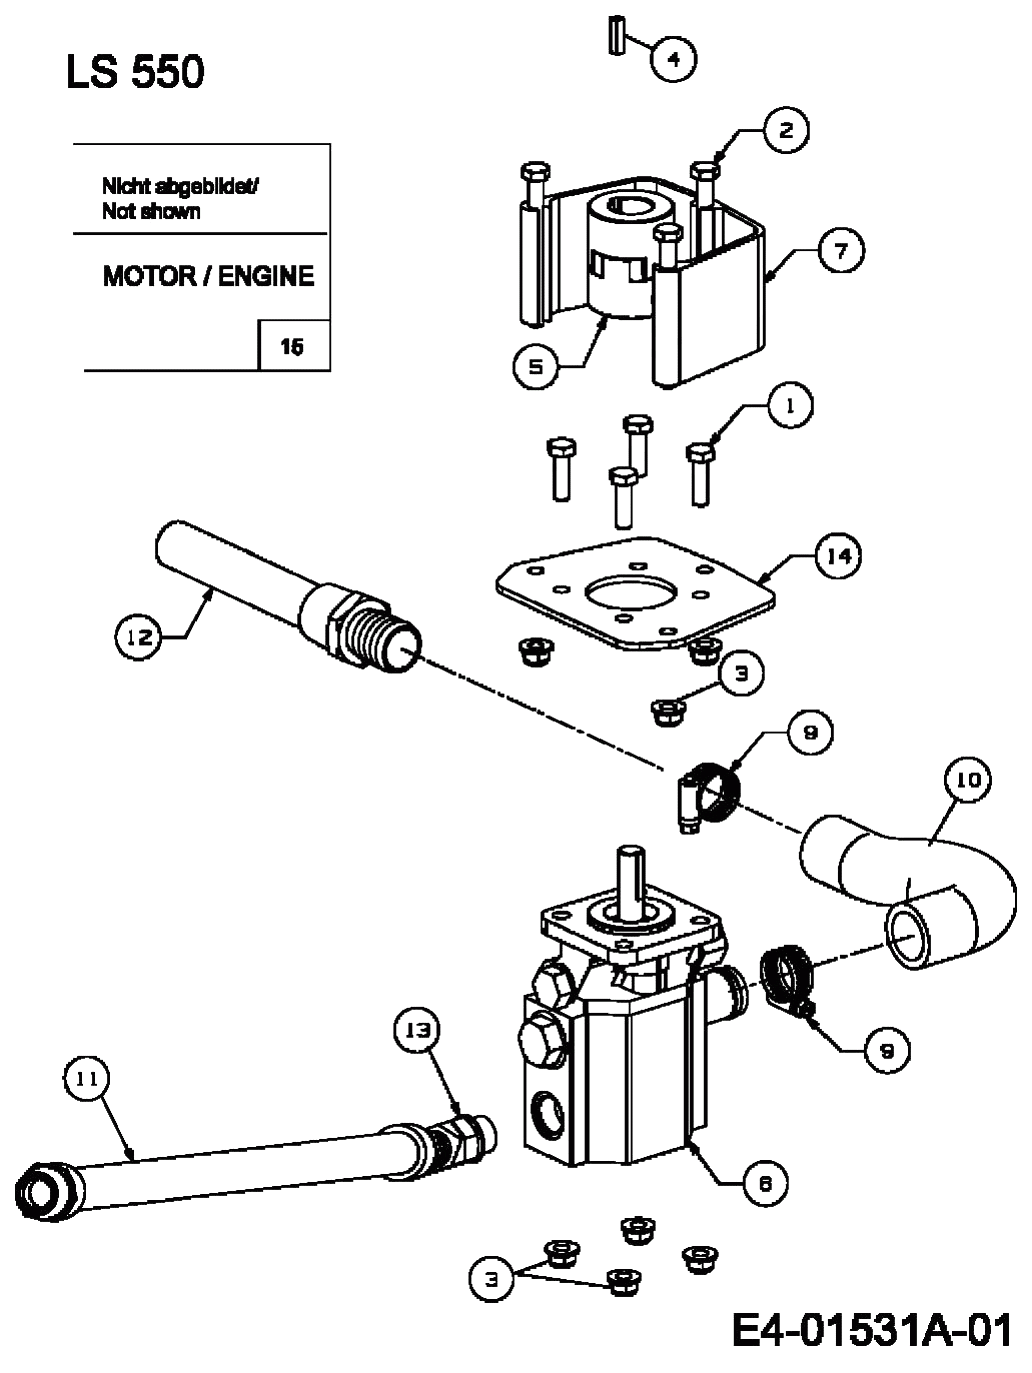 MTD Артикул 24AF550C678 (год выпуска 2009). Gear pump